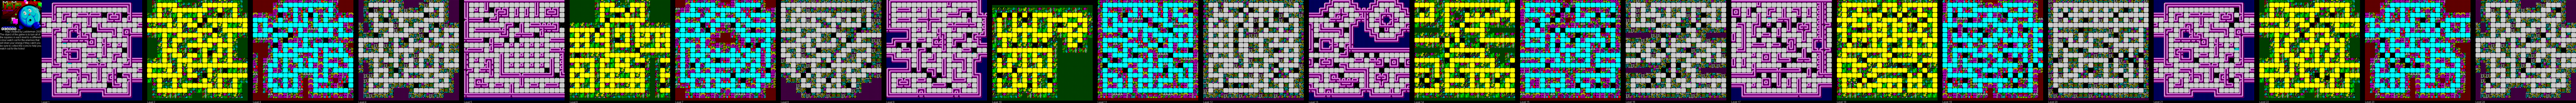 Maze Mania - The Map